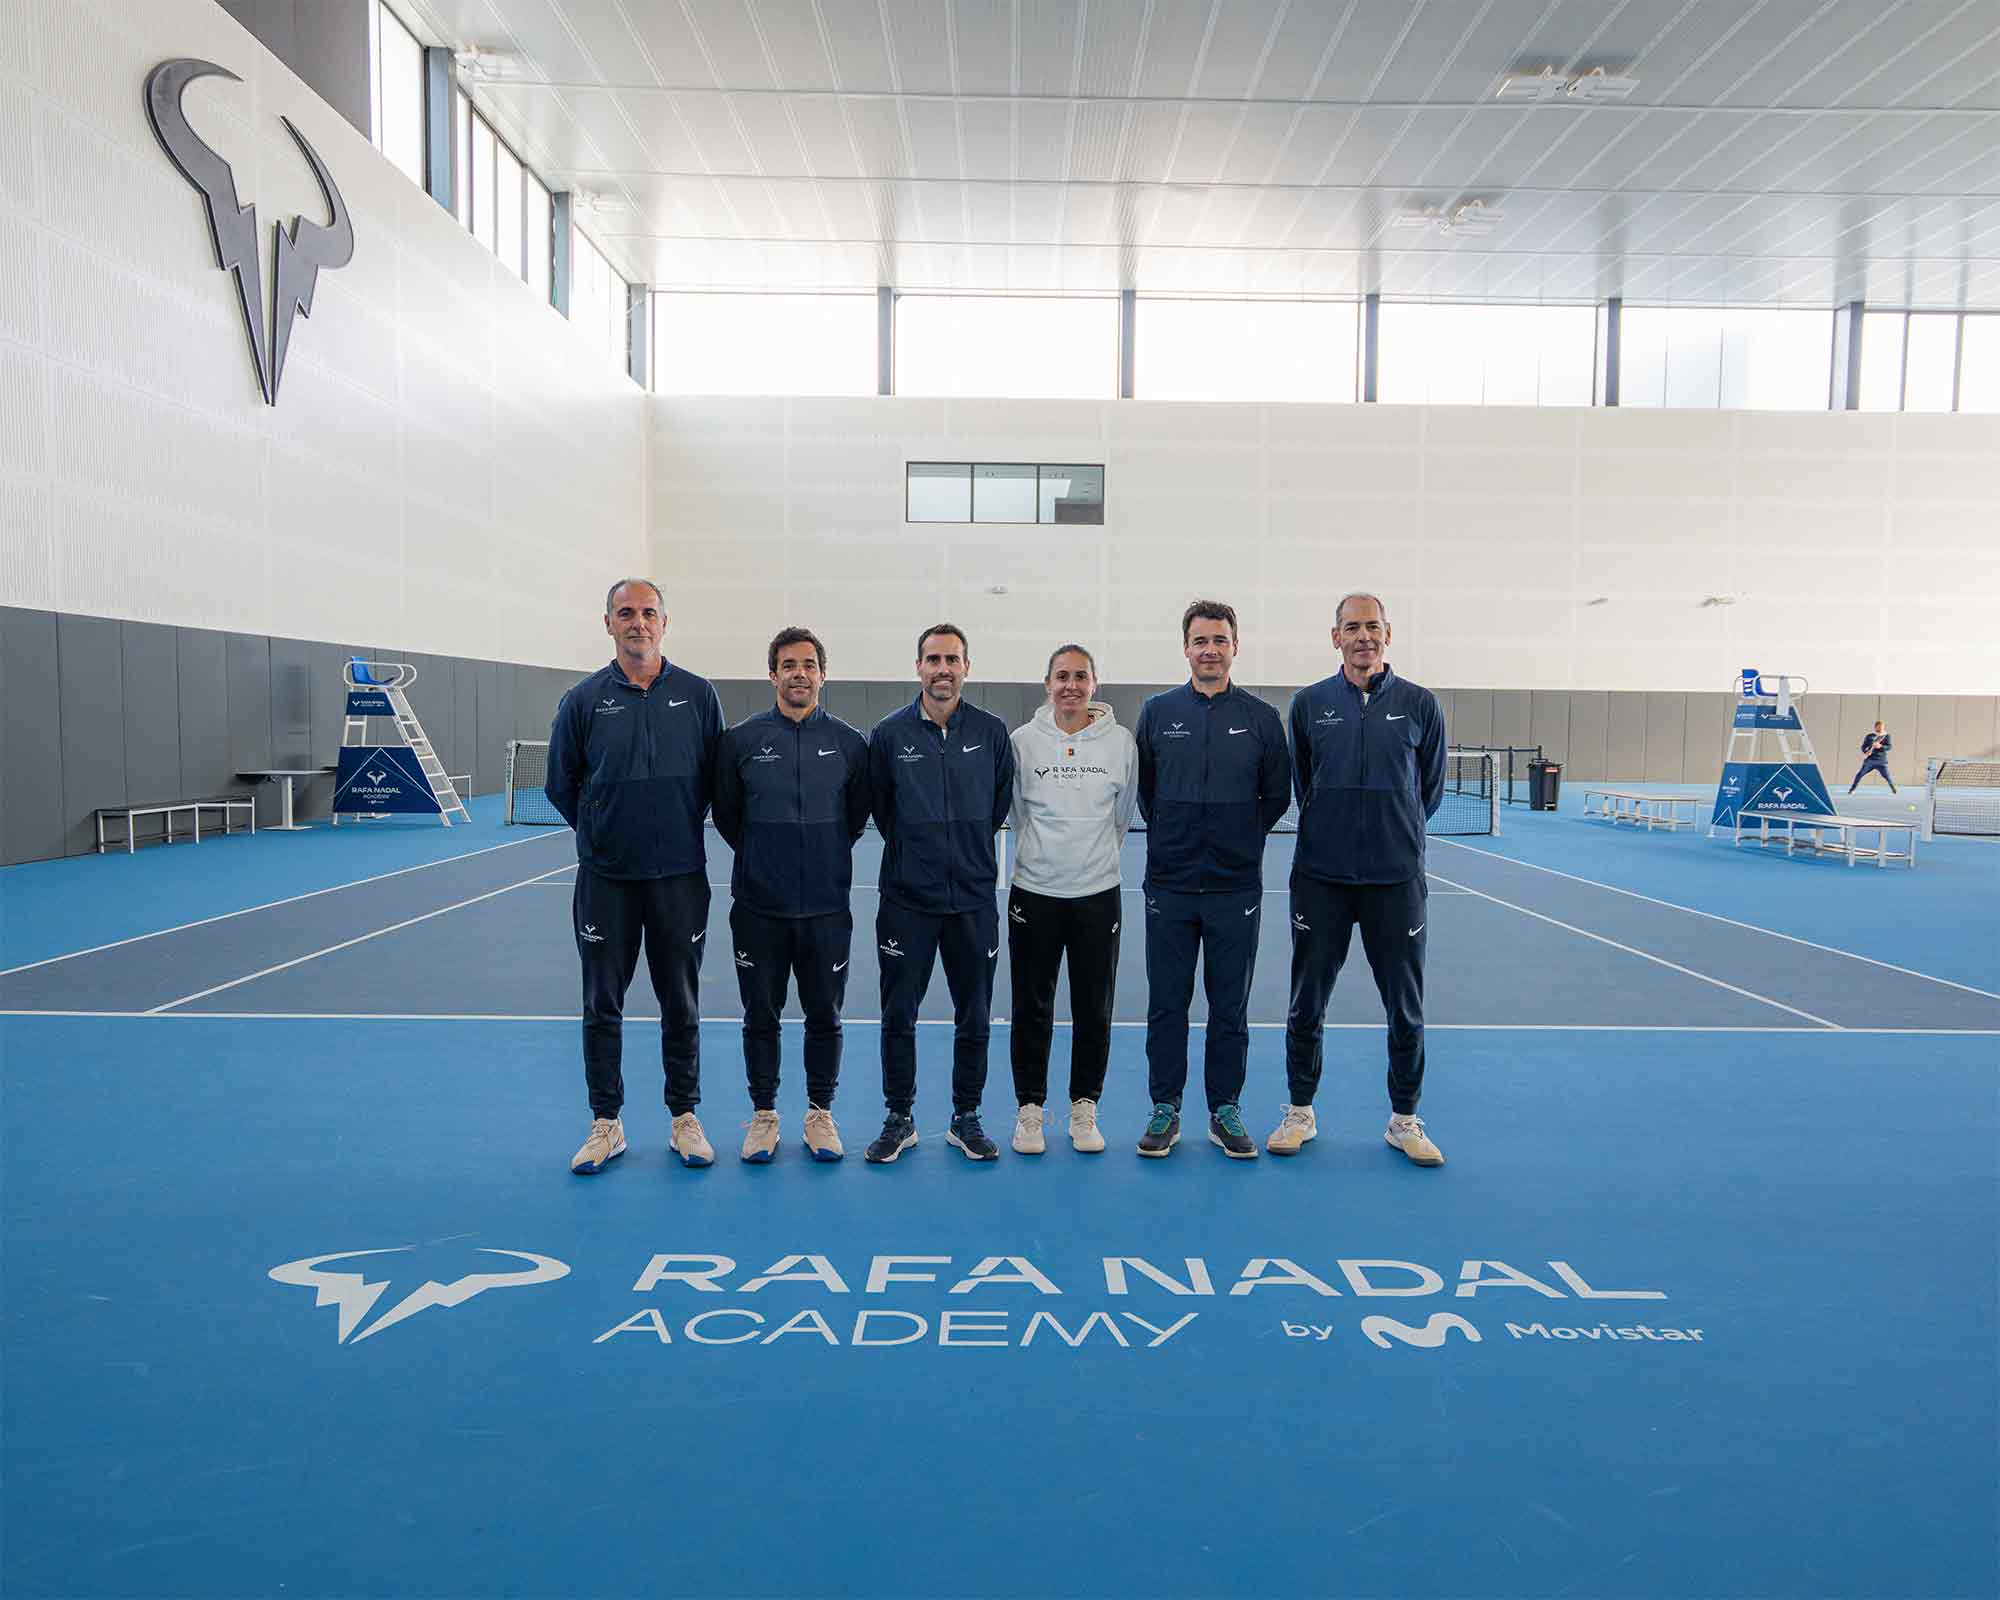 Rafa Nadal Academy by Movistar: Un equipo técnico de 10